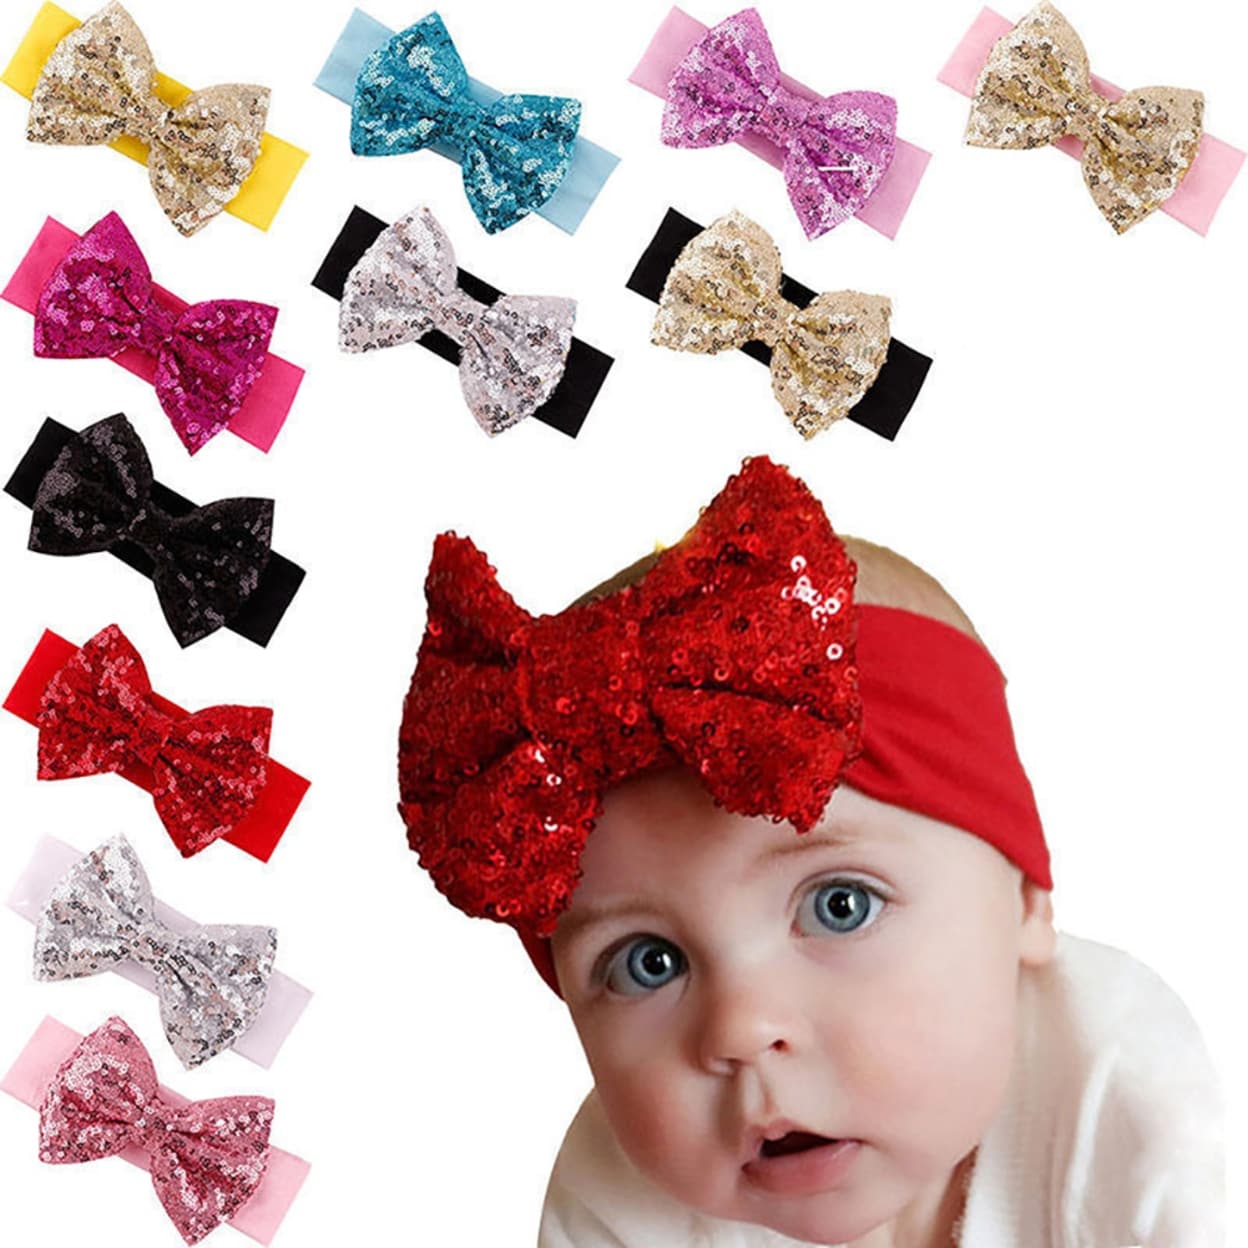 hair bands for infant girl